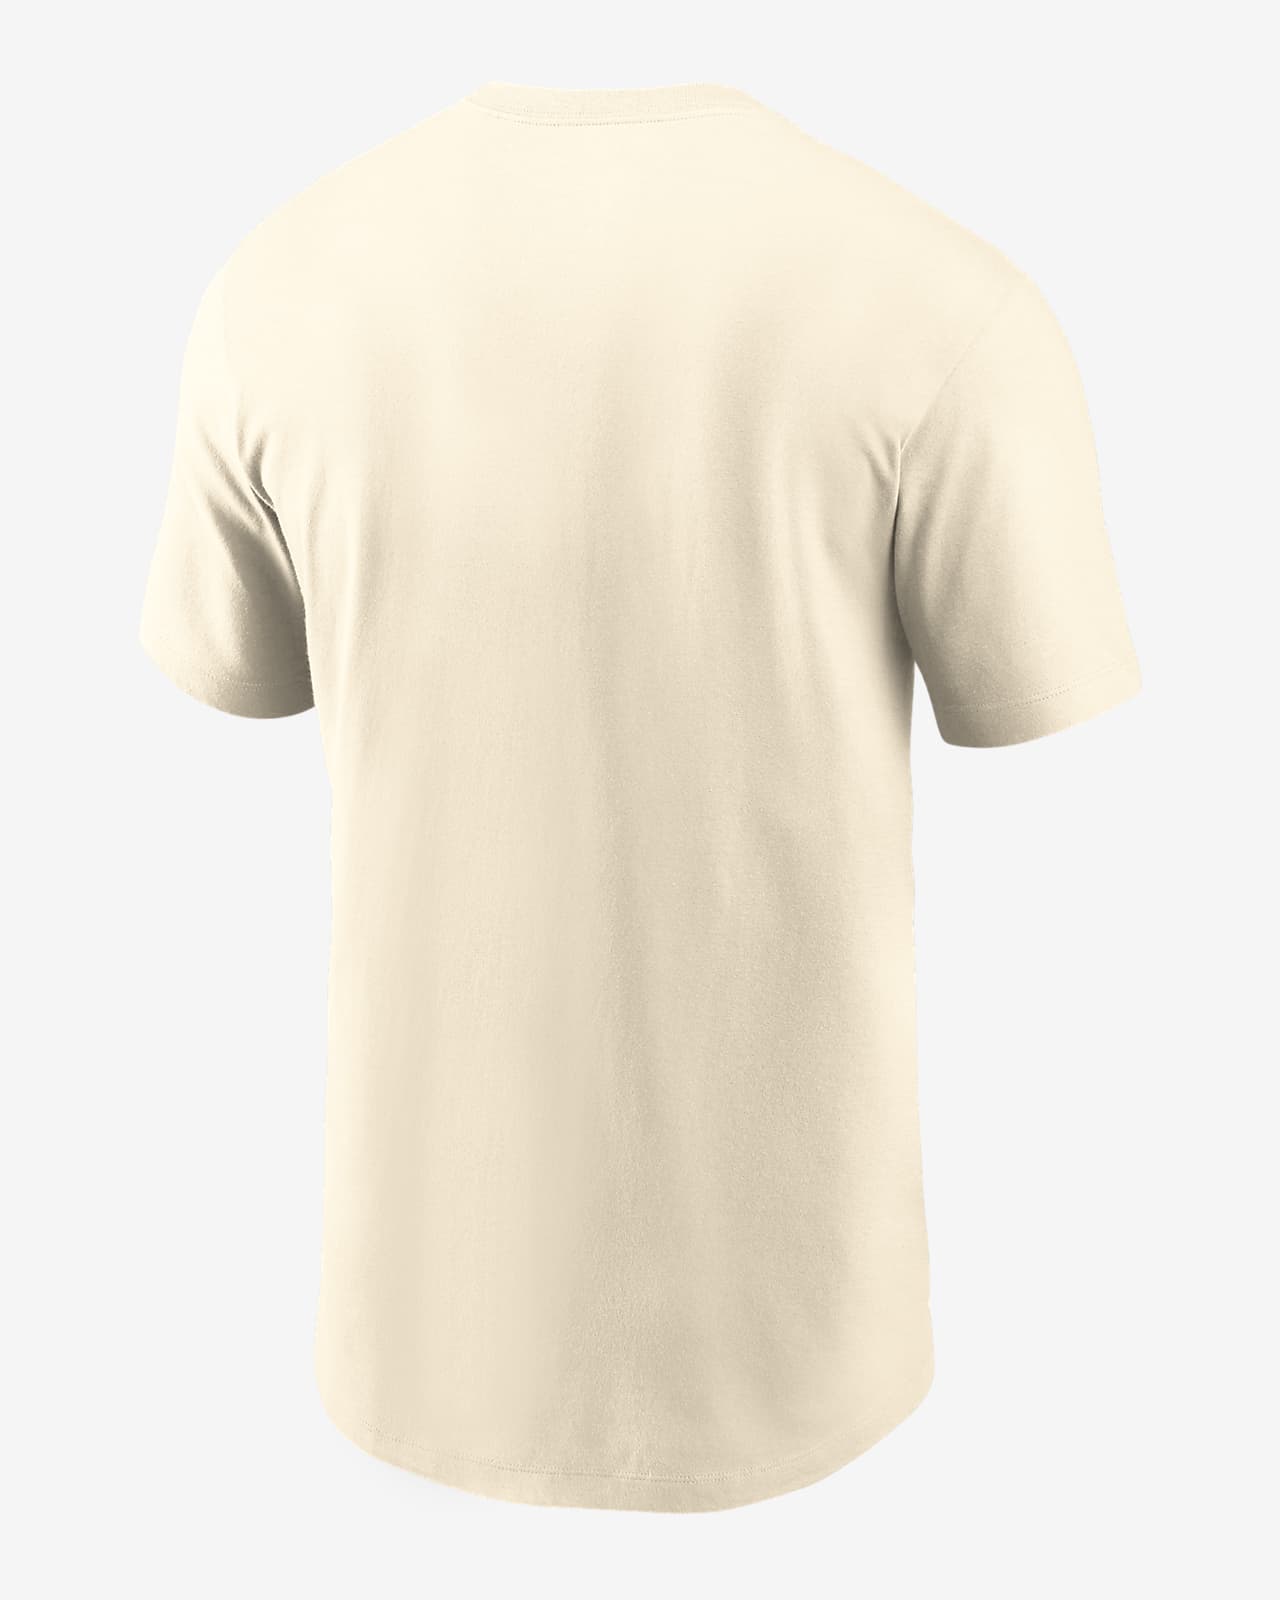 Nike City Connect Wordmark (MLB Texas Rangers) Men's T-Shirt. Nike.com